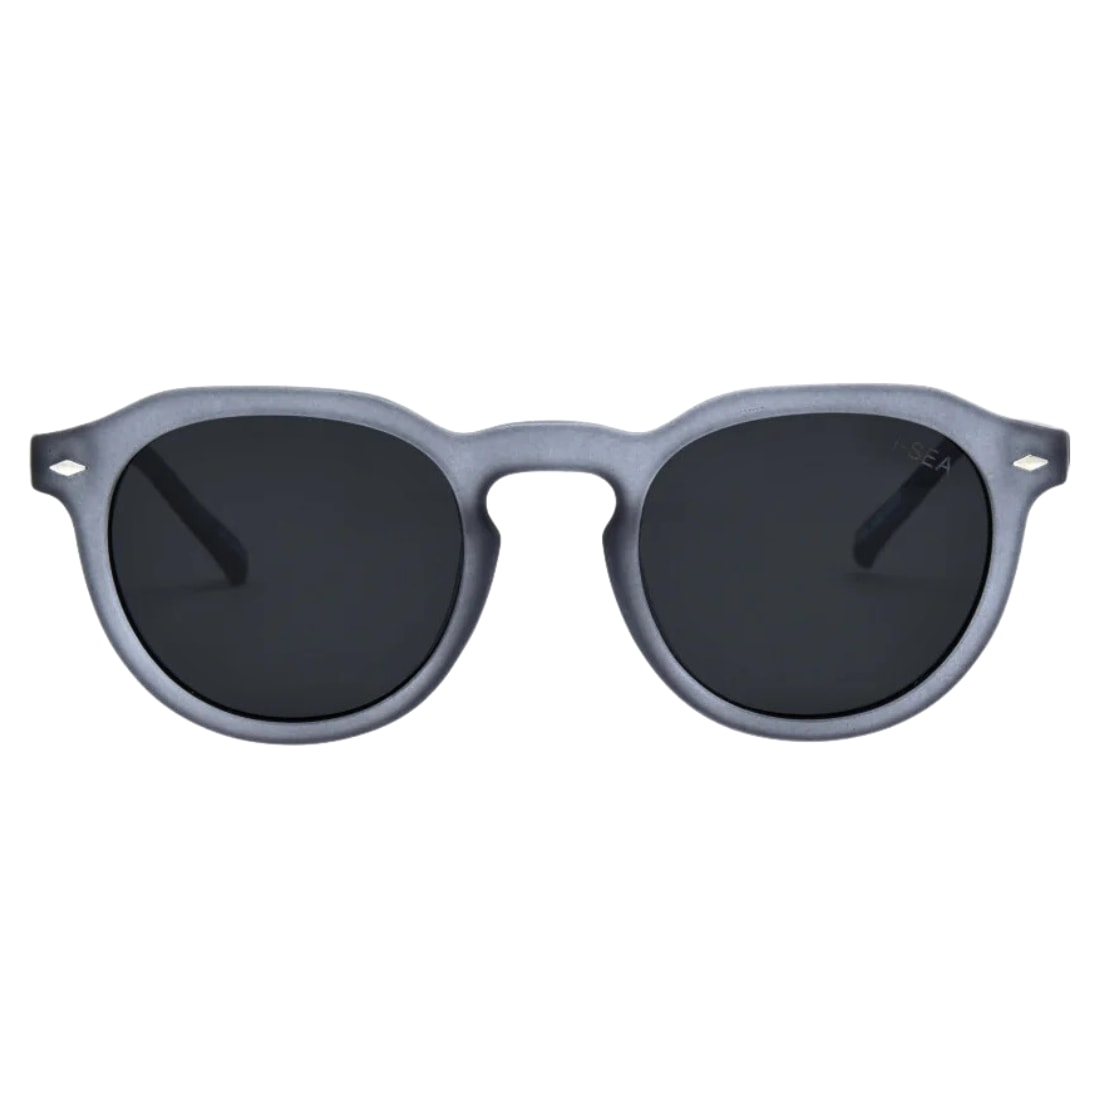 I-Sea Blair Conklin Polarised Sunglasses - Gray/Smoke Polarized - Round Sunglasses by I-Sea